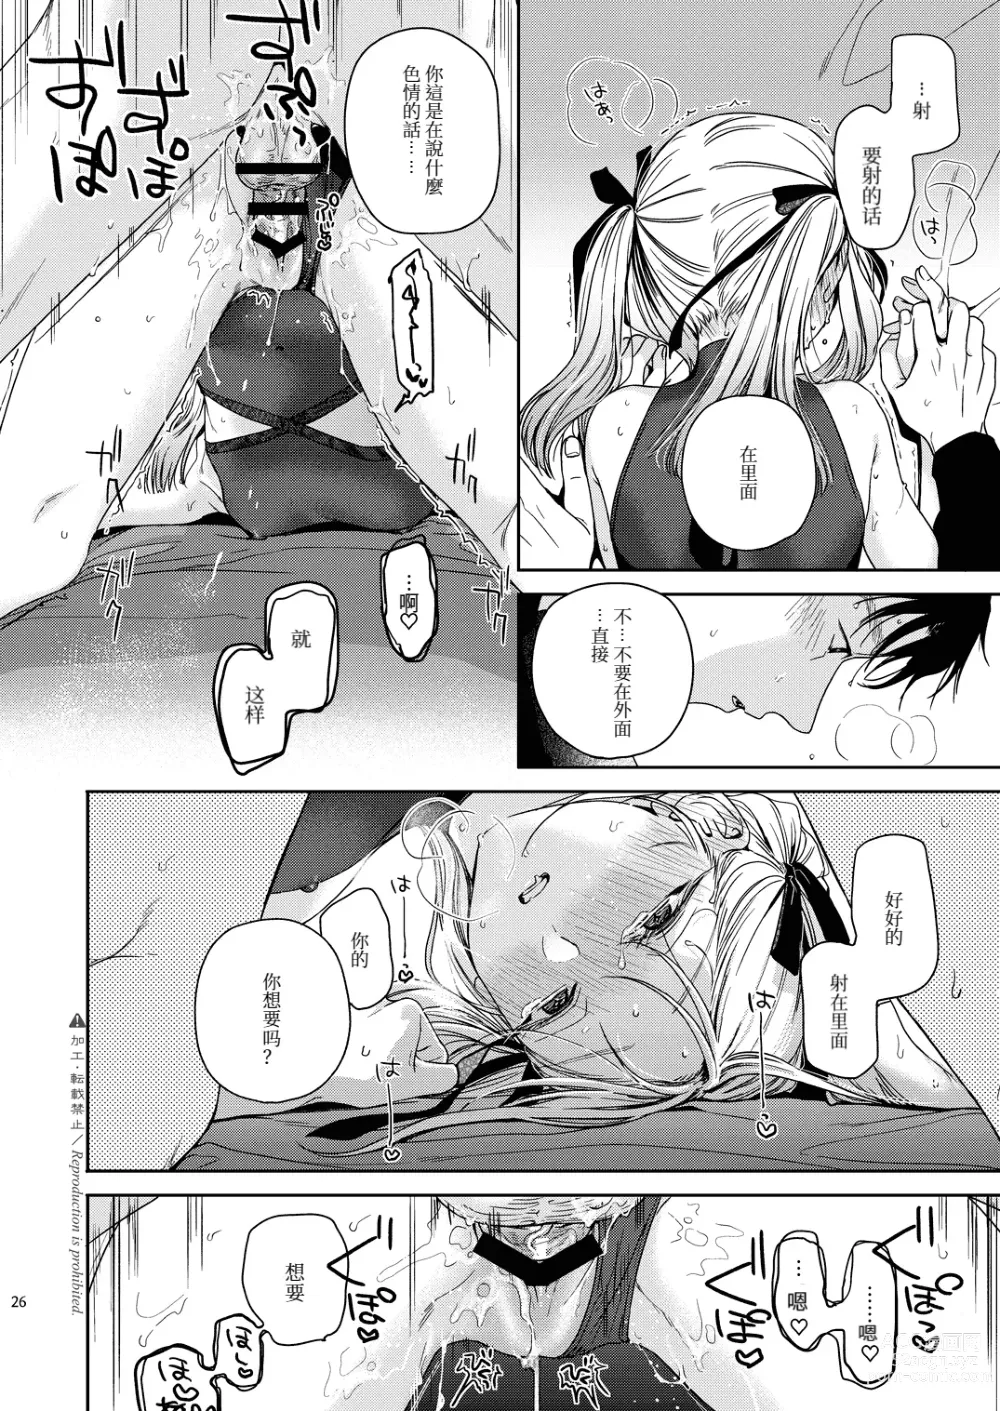 Page 28 of doujinshi Katami to Getsumei